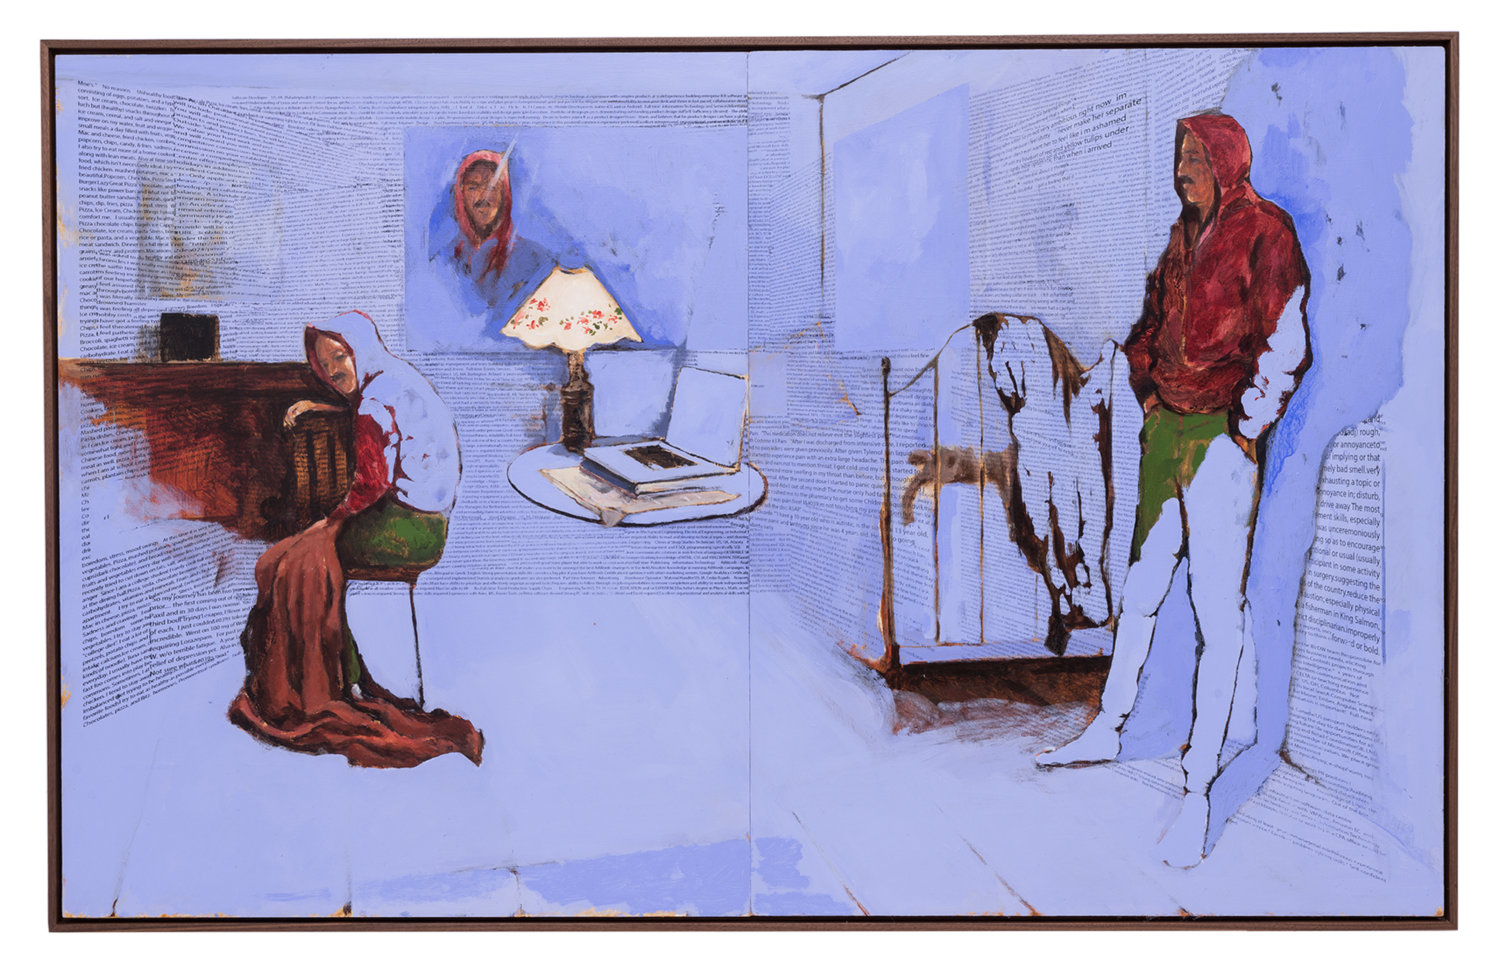 (8) Robert Brambora, Circle (Dream) (after Degas), 2023, acrylic, silk screen on wood, wooden frame, 100 x 160 x 4 cm, unique